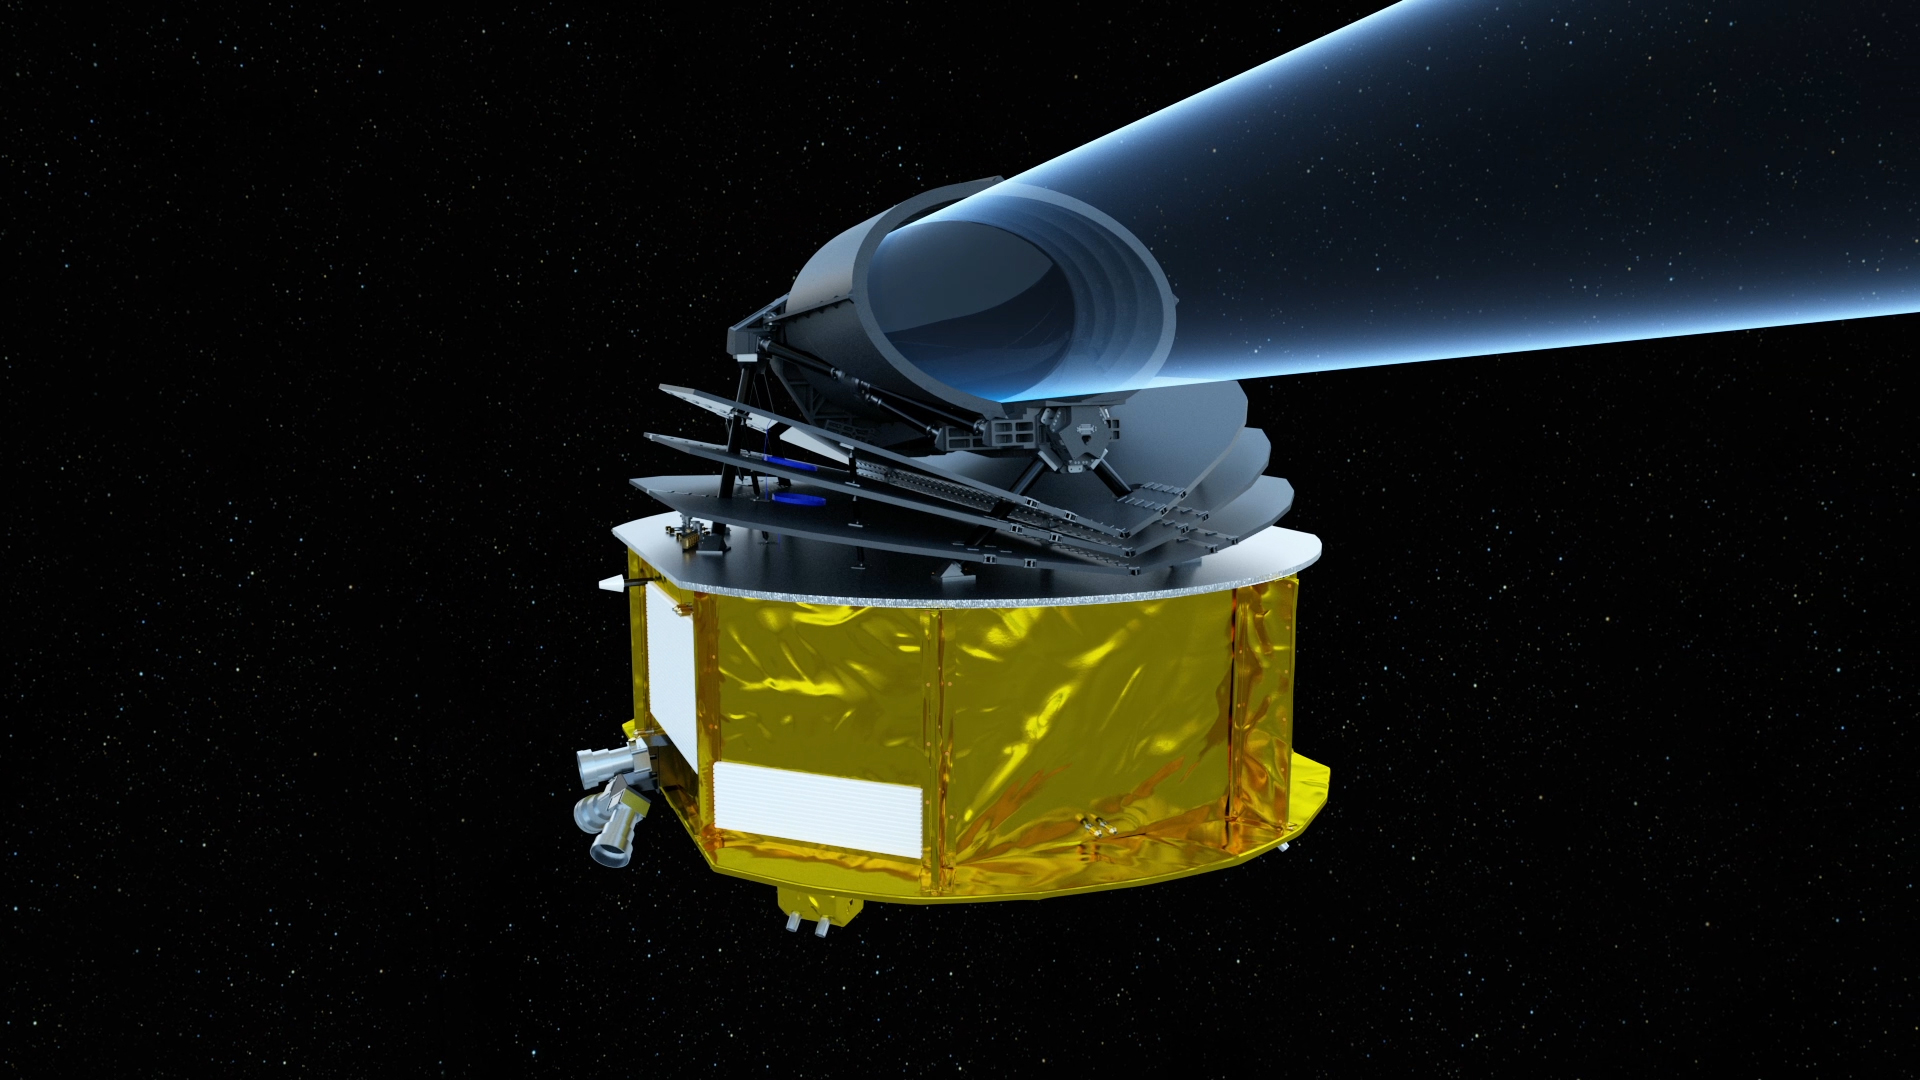 ESA formally adopts Ariel, the exoplanet explorer